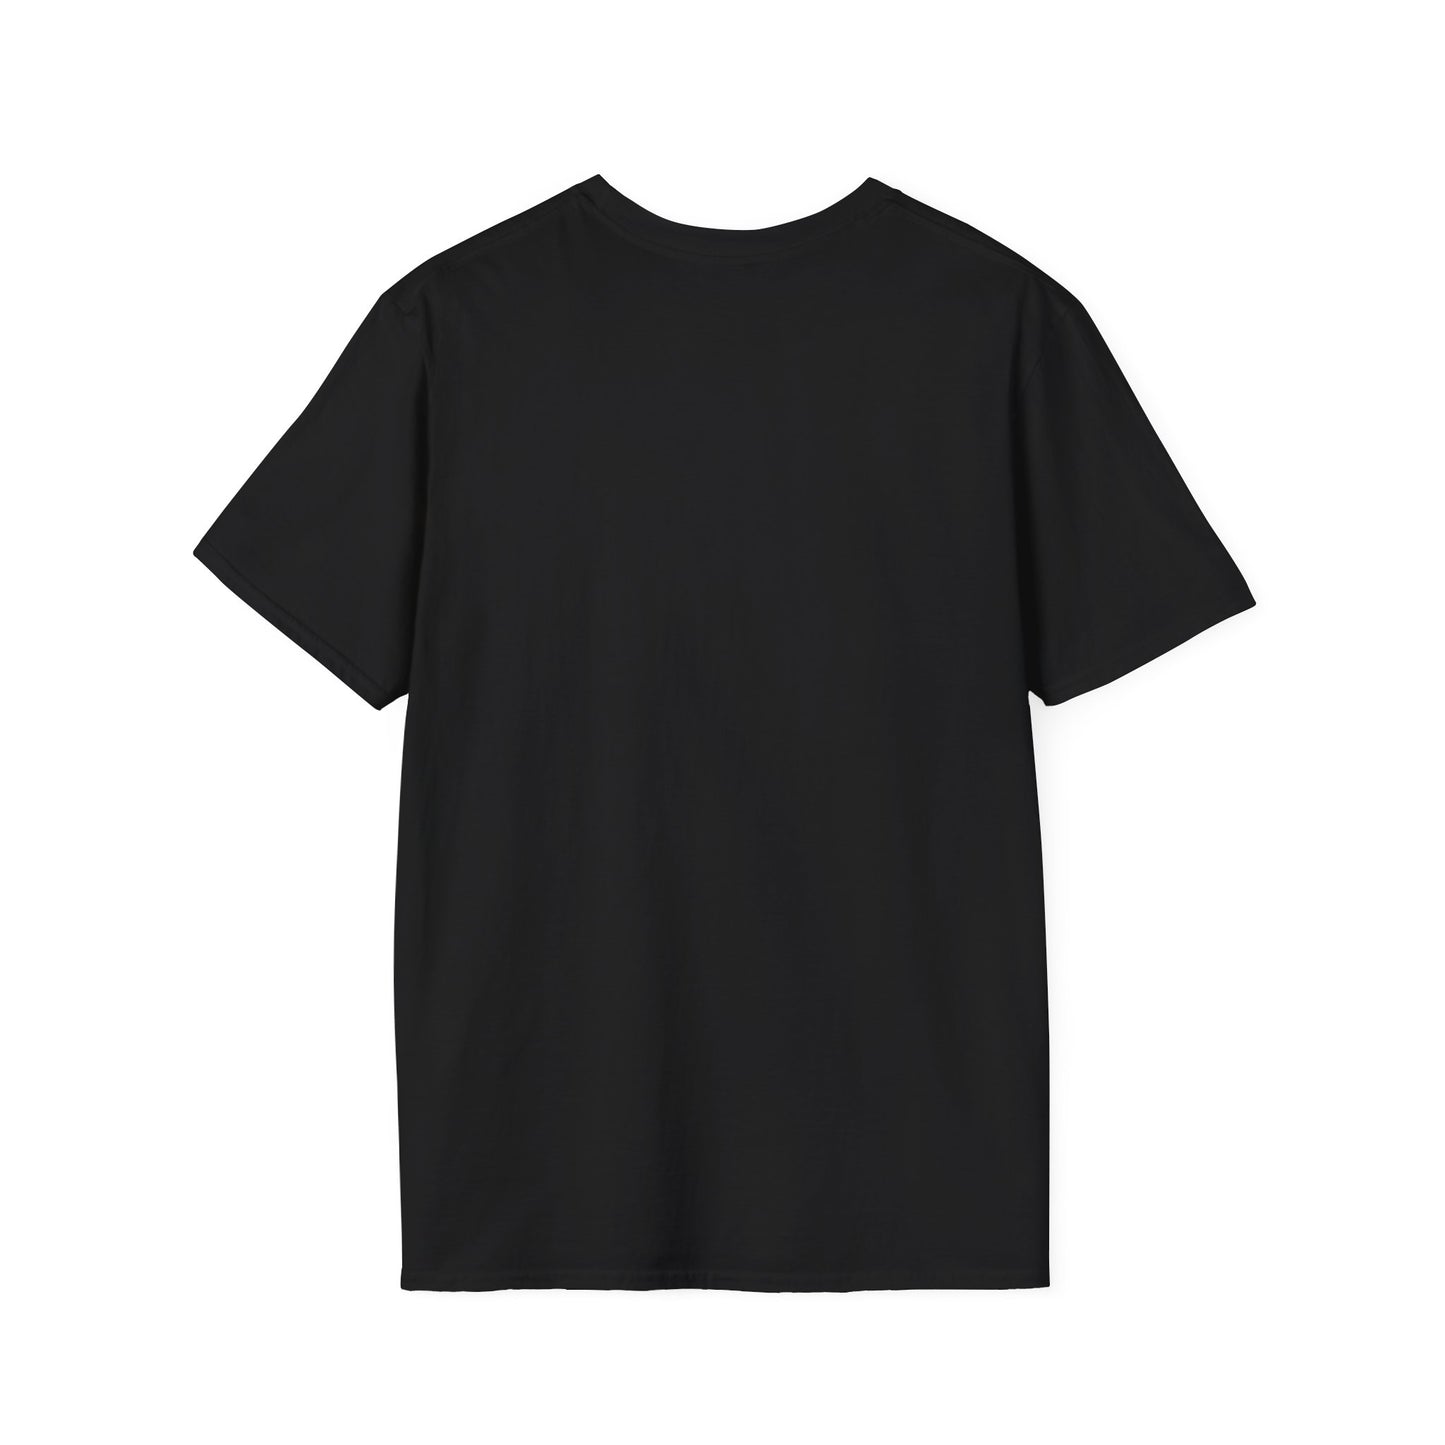 American Bald Eagle Unisex Softstyle T-Shirt